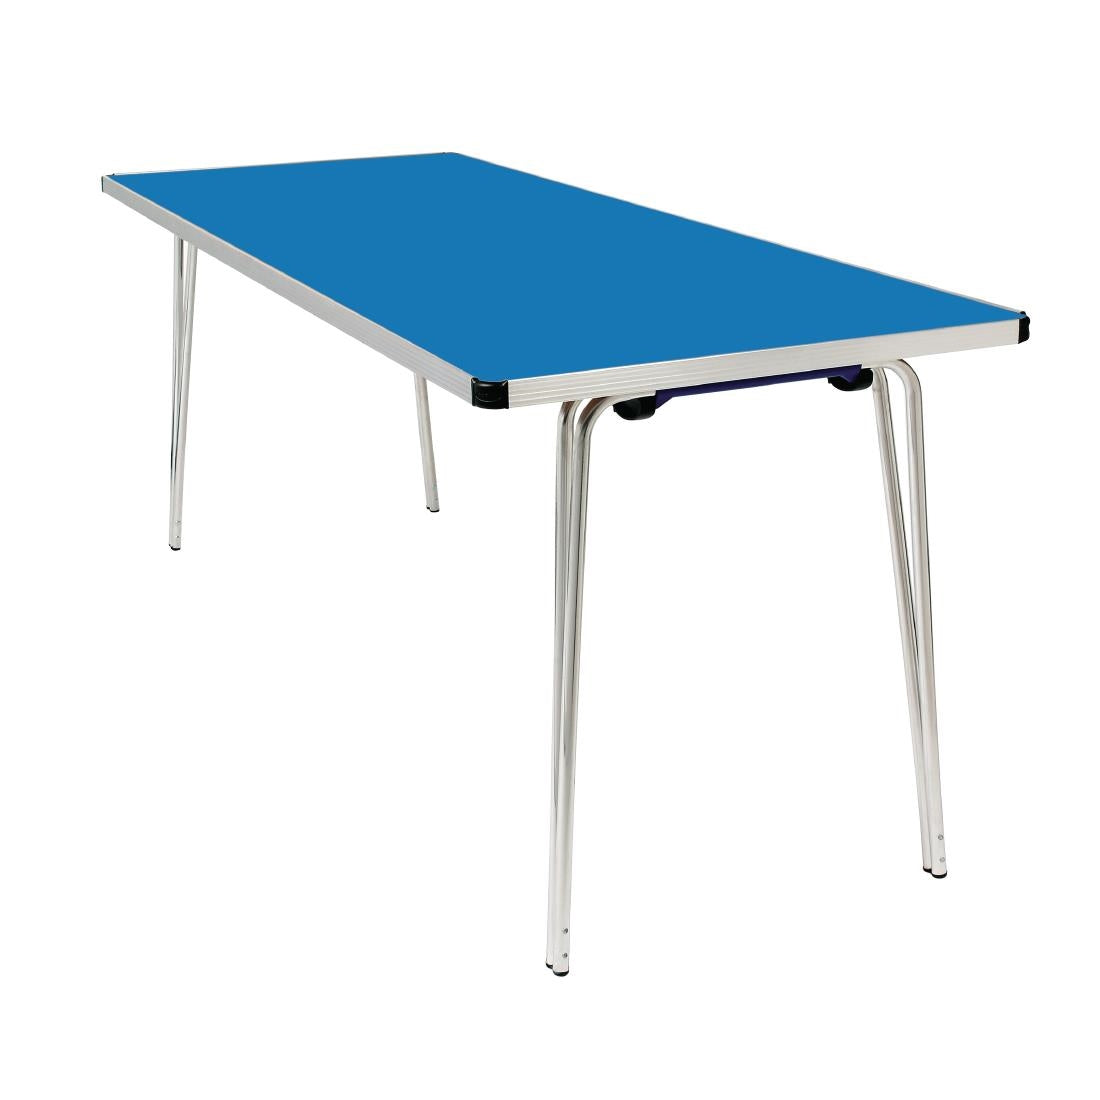 DM944 Gopak Contour Folding Table Blue 6ft JD Catering Equipment Solutions Ltd